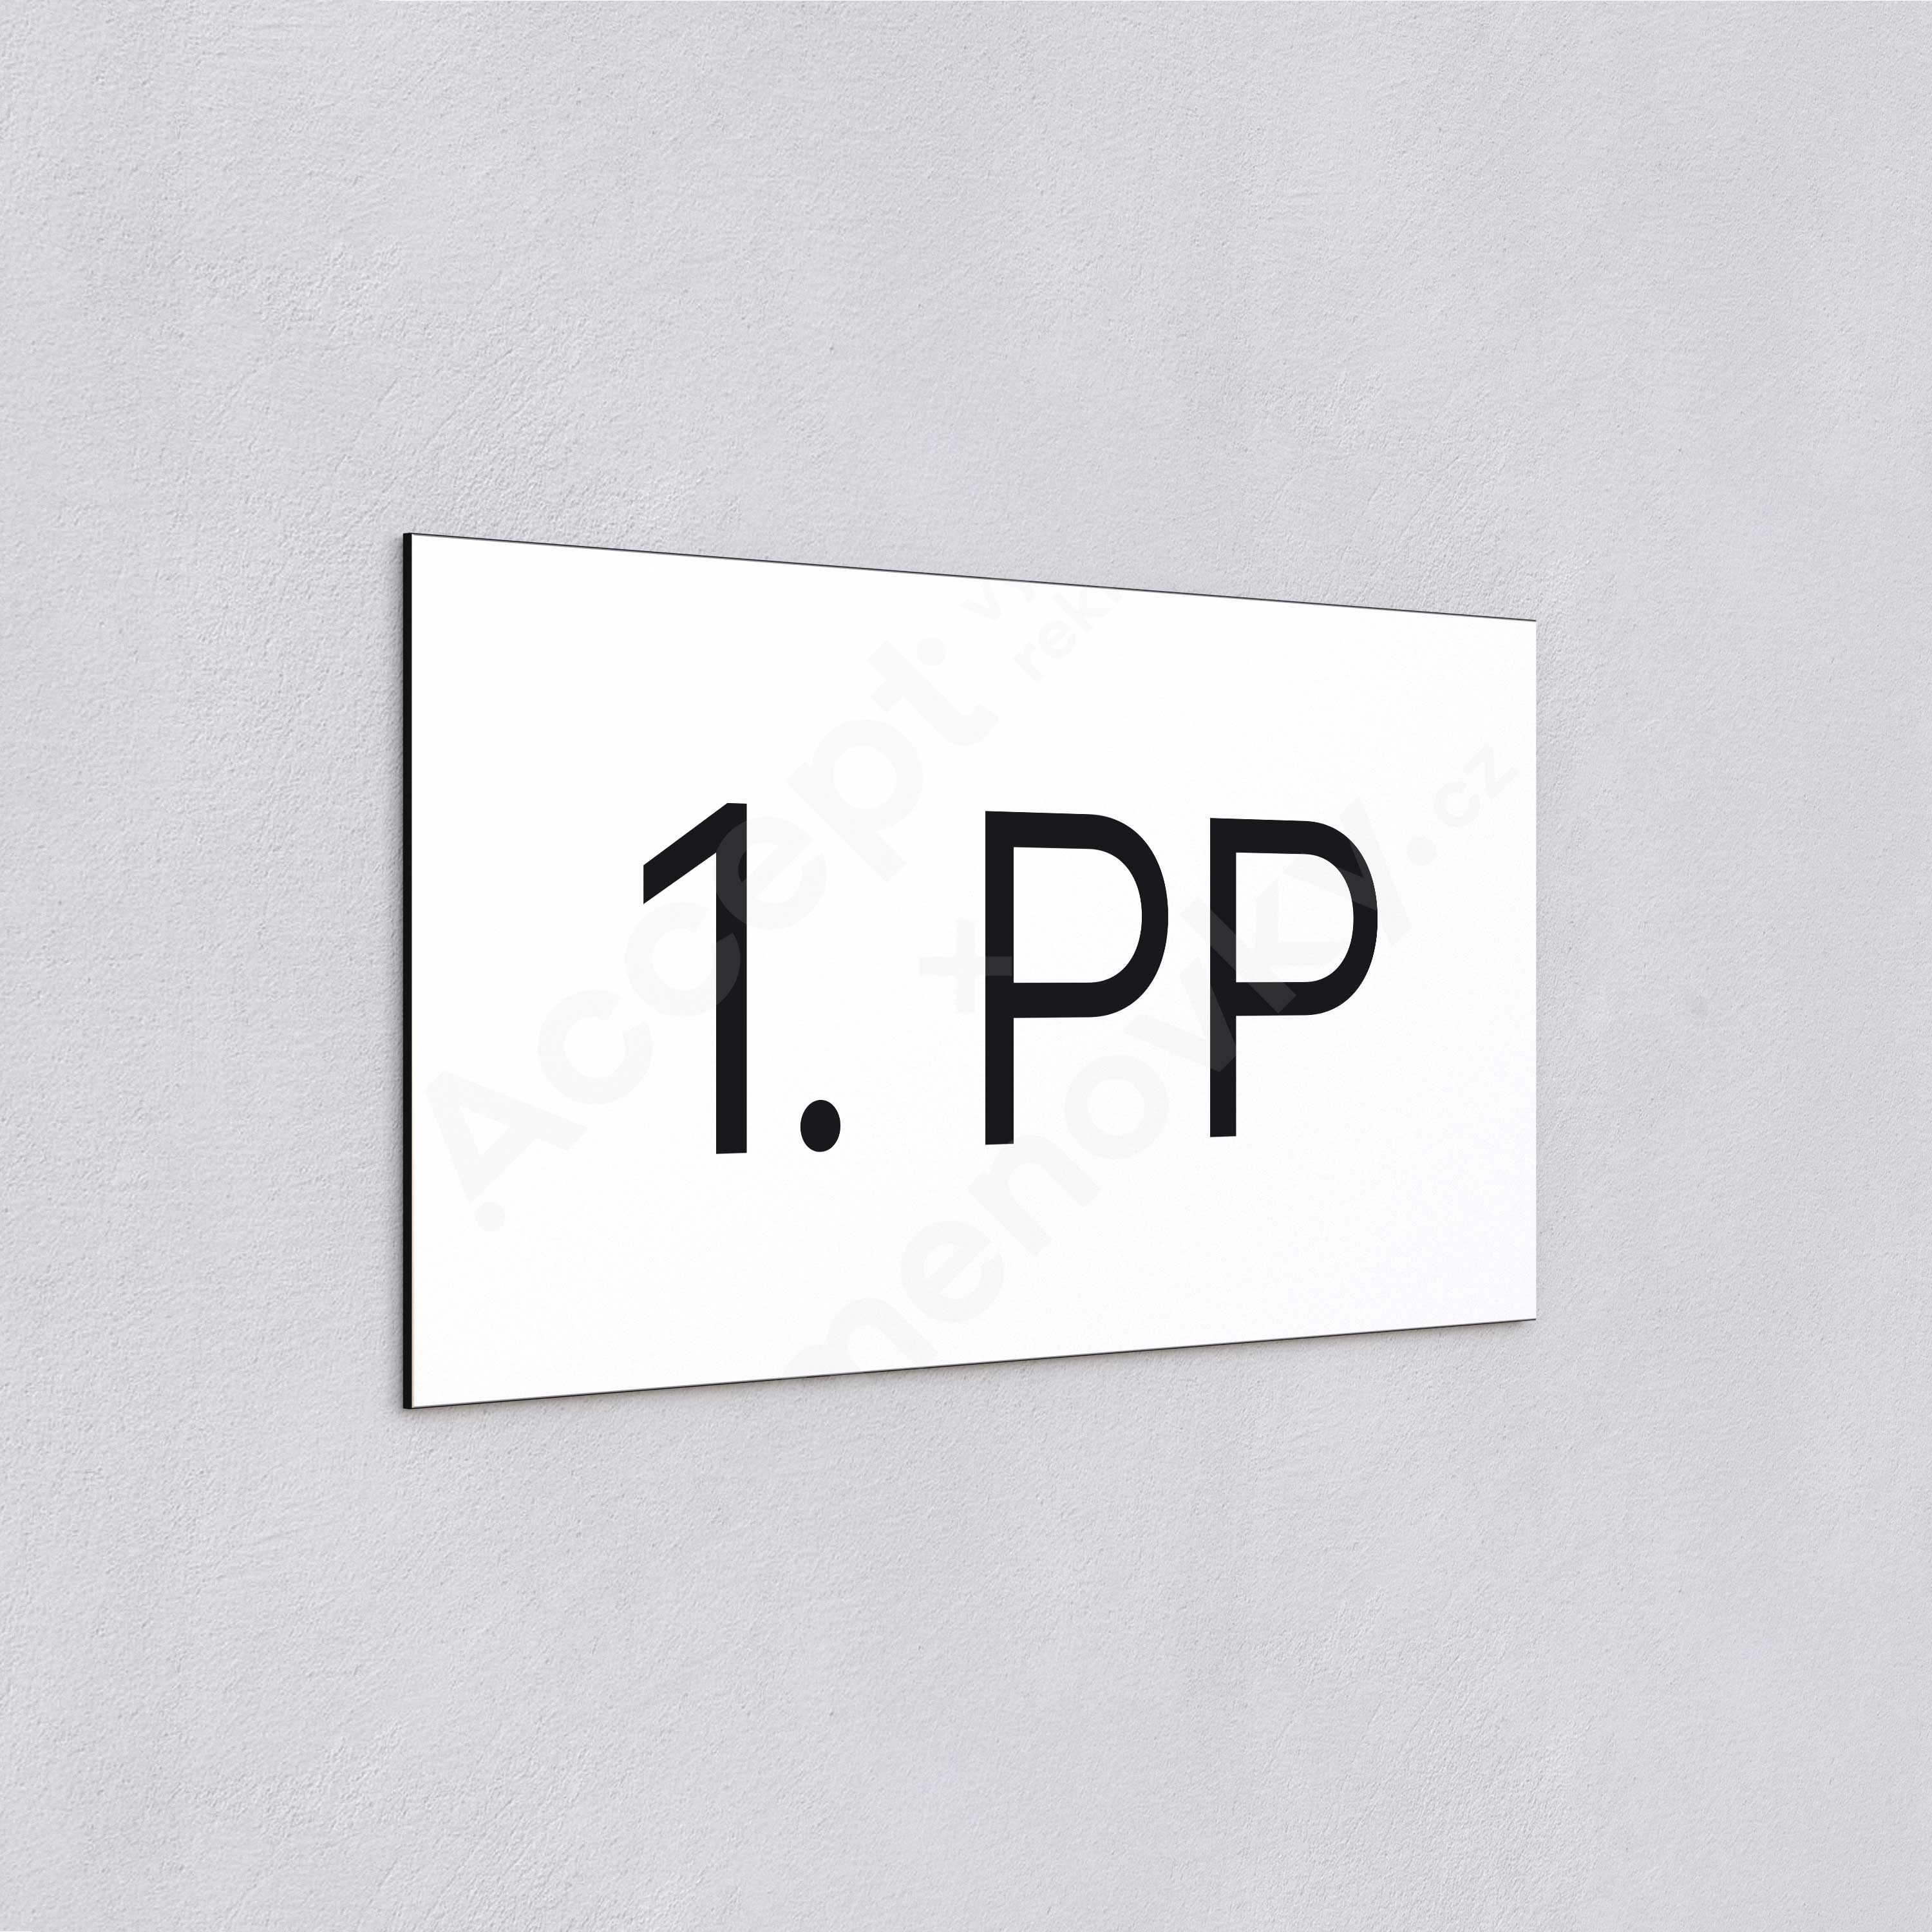 ACCEPT Označení podlaží "1. PP" (300 x 150 mm) - bílá tabulka - černý popis